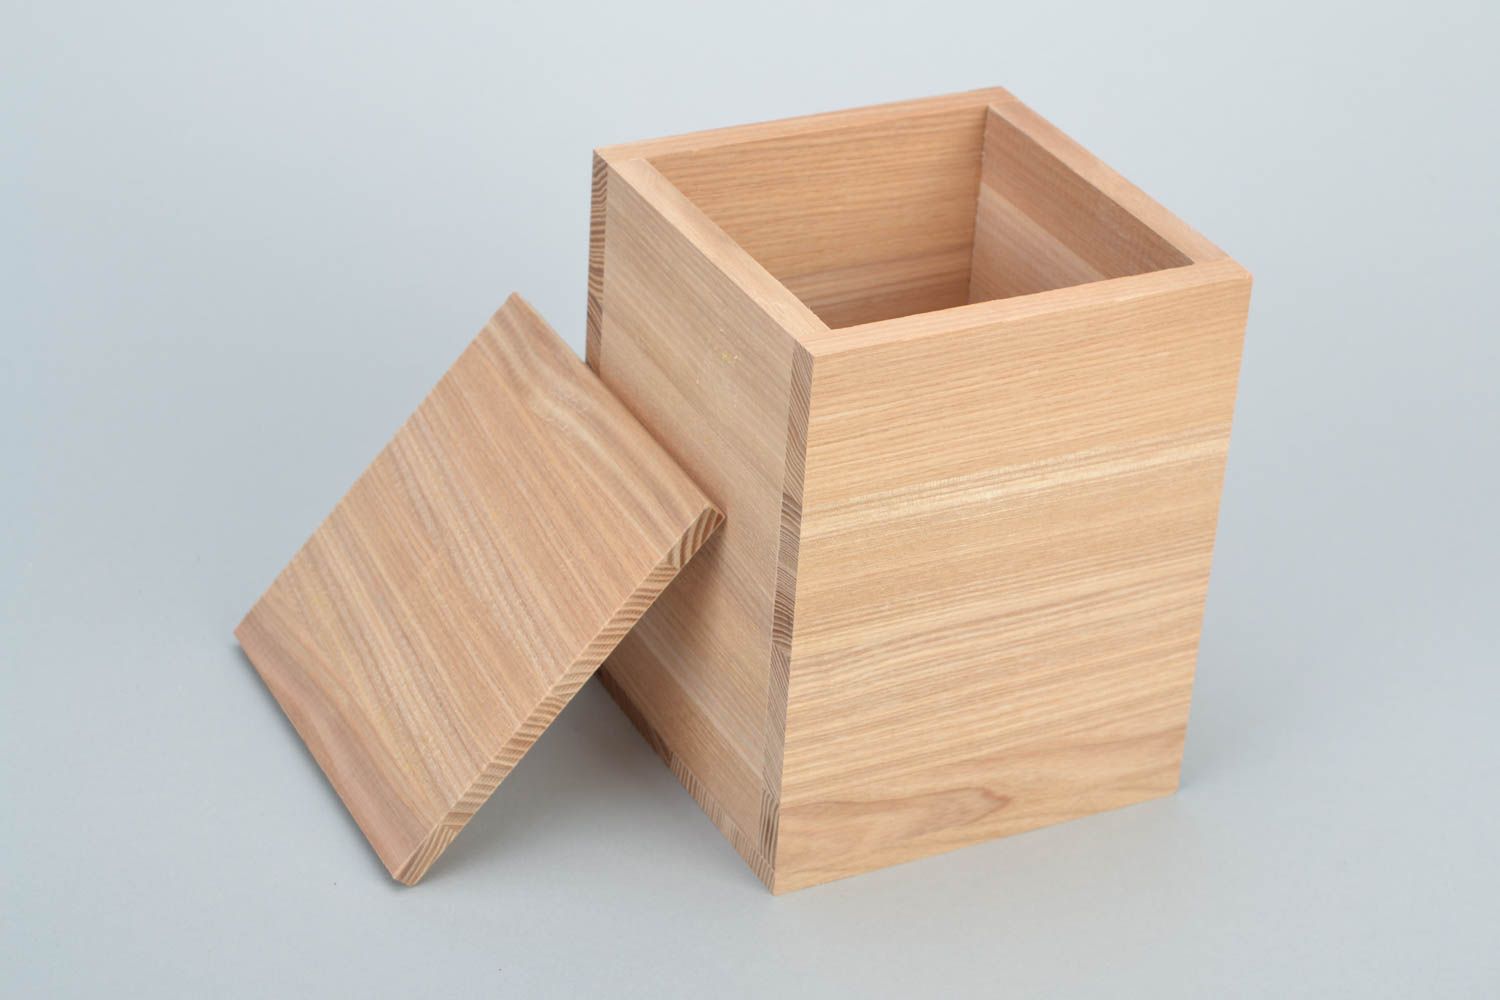 Handmade rectangular ash wood box craft blank for decoupage or painting photo 5